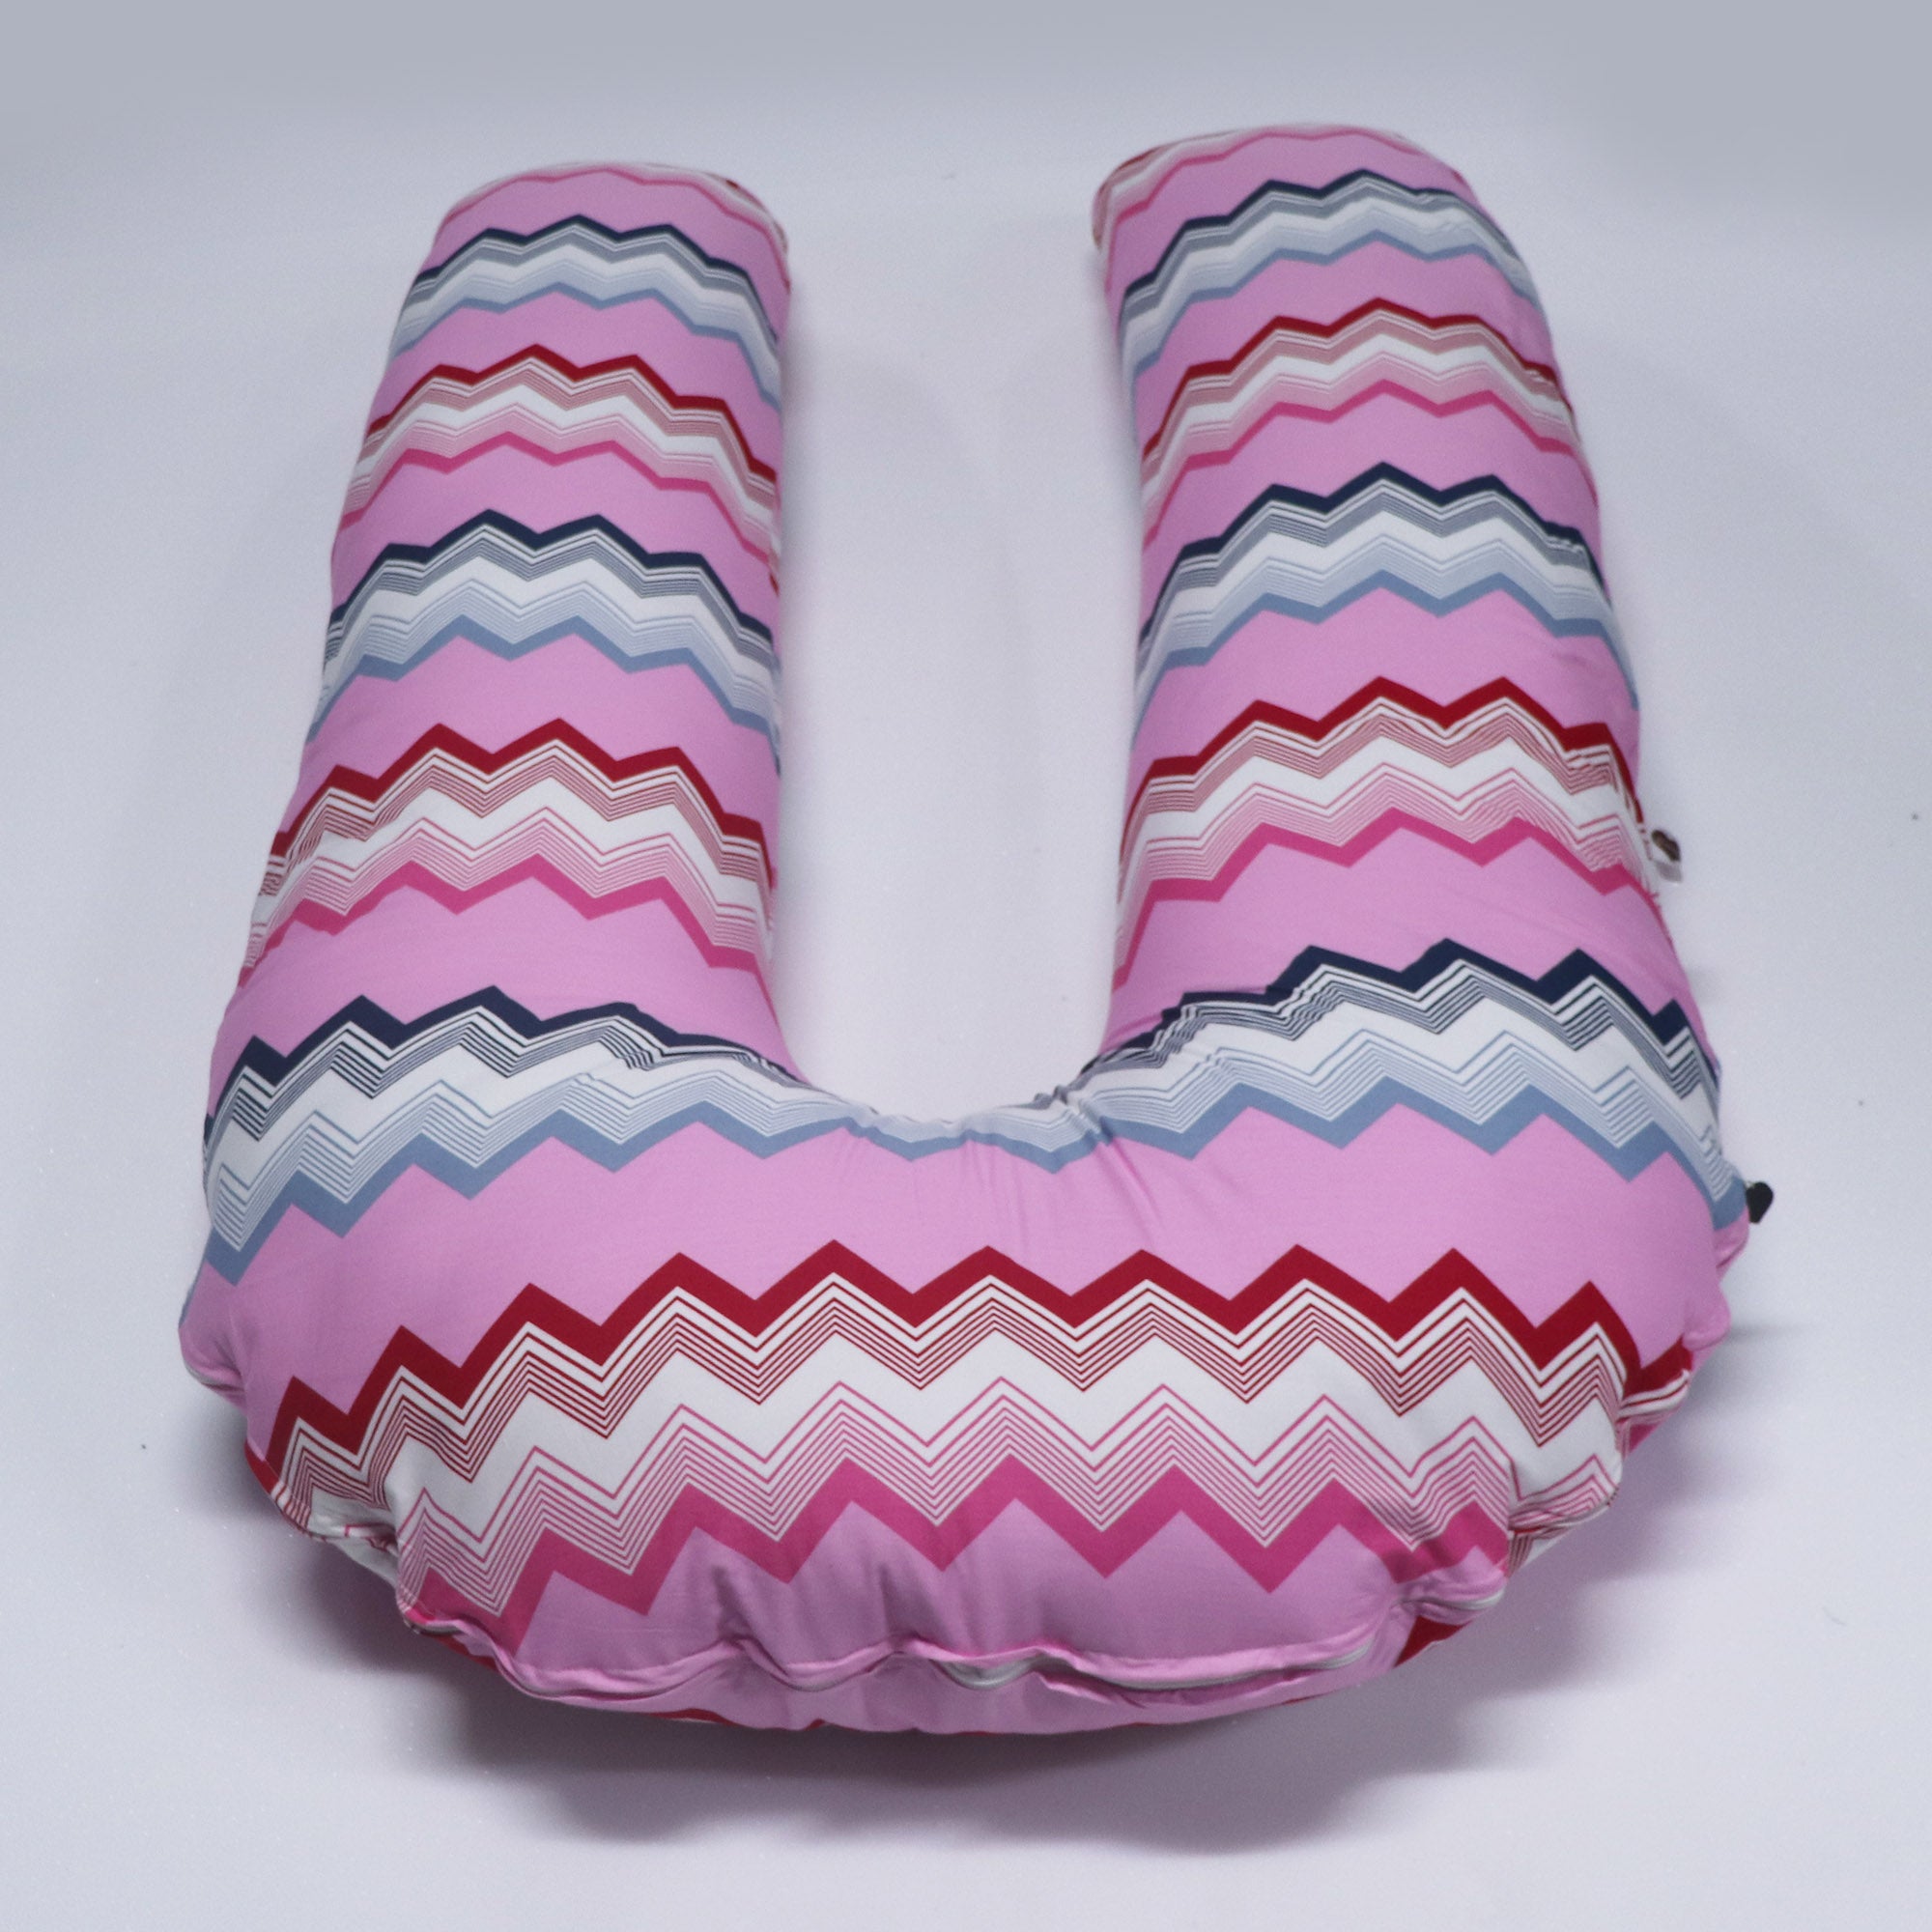 Pinnacle Pink Super Premium U Shape Pregnancy Body Pillow